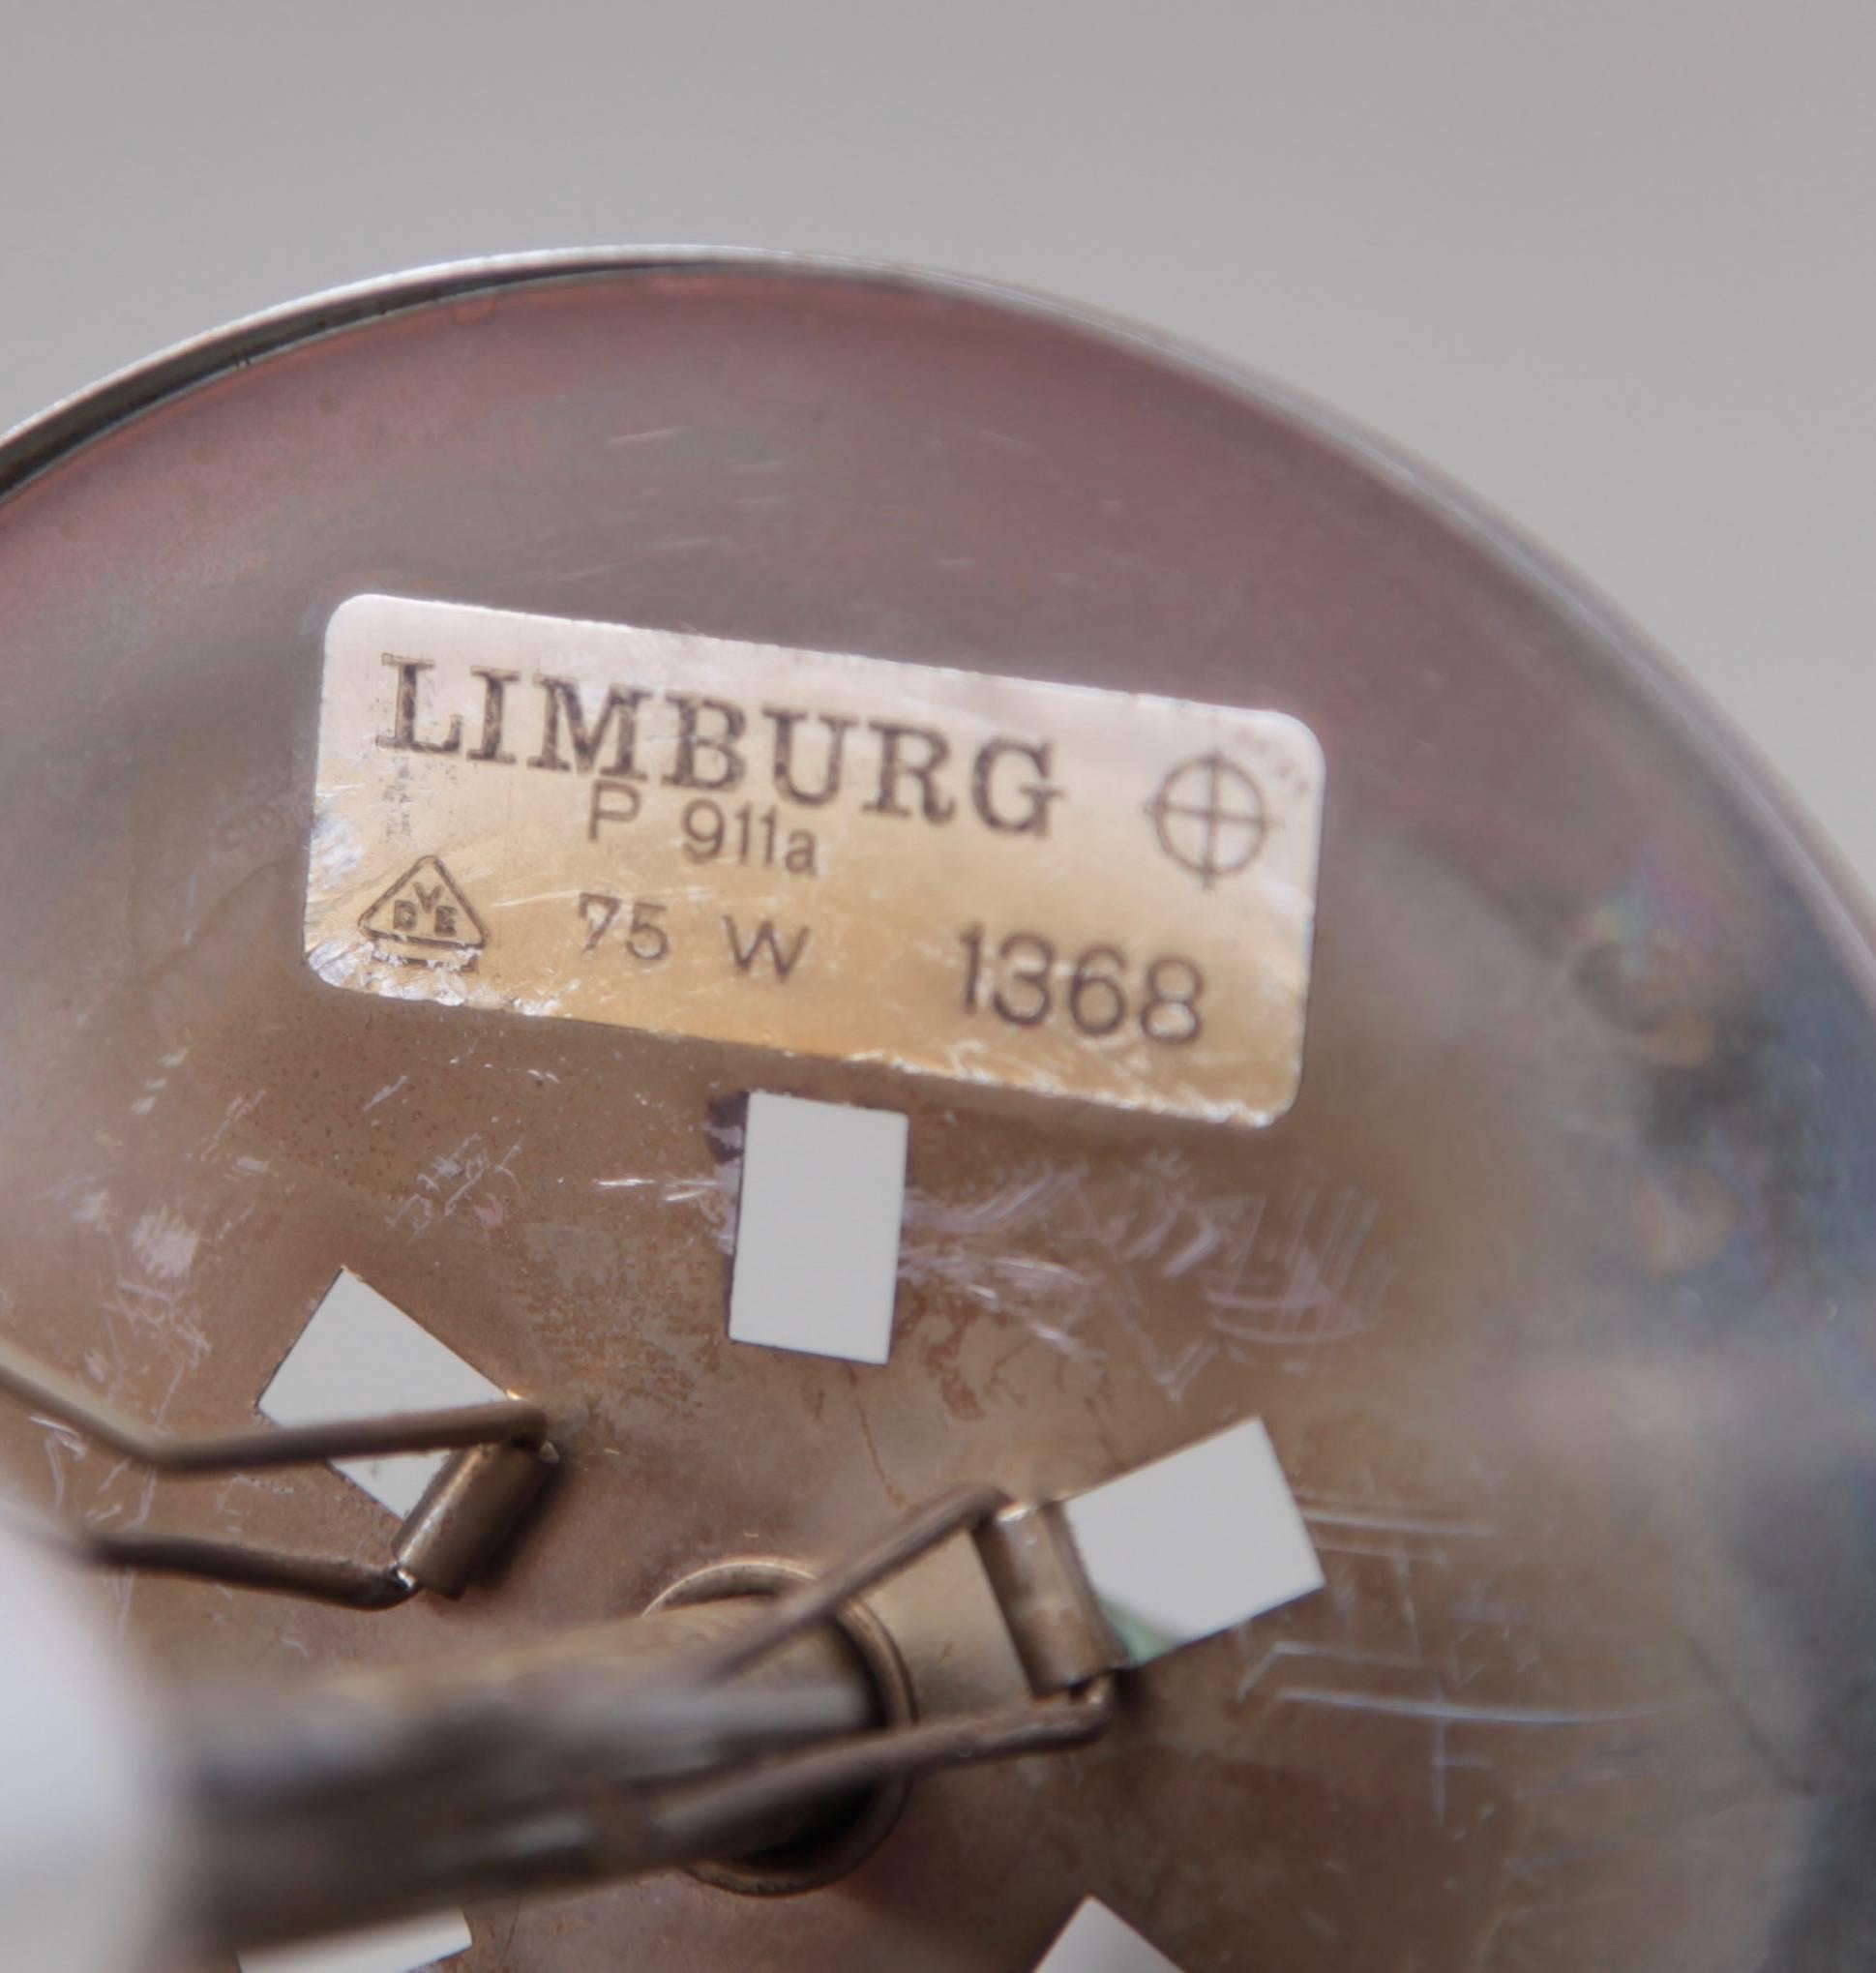 German One of 20 Globe Pendant Lamps by Glashütte Limburg For Sale